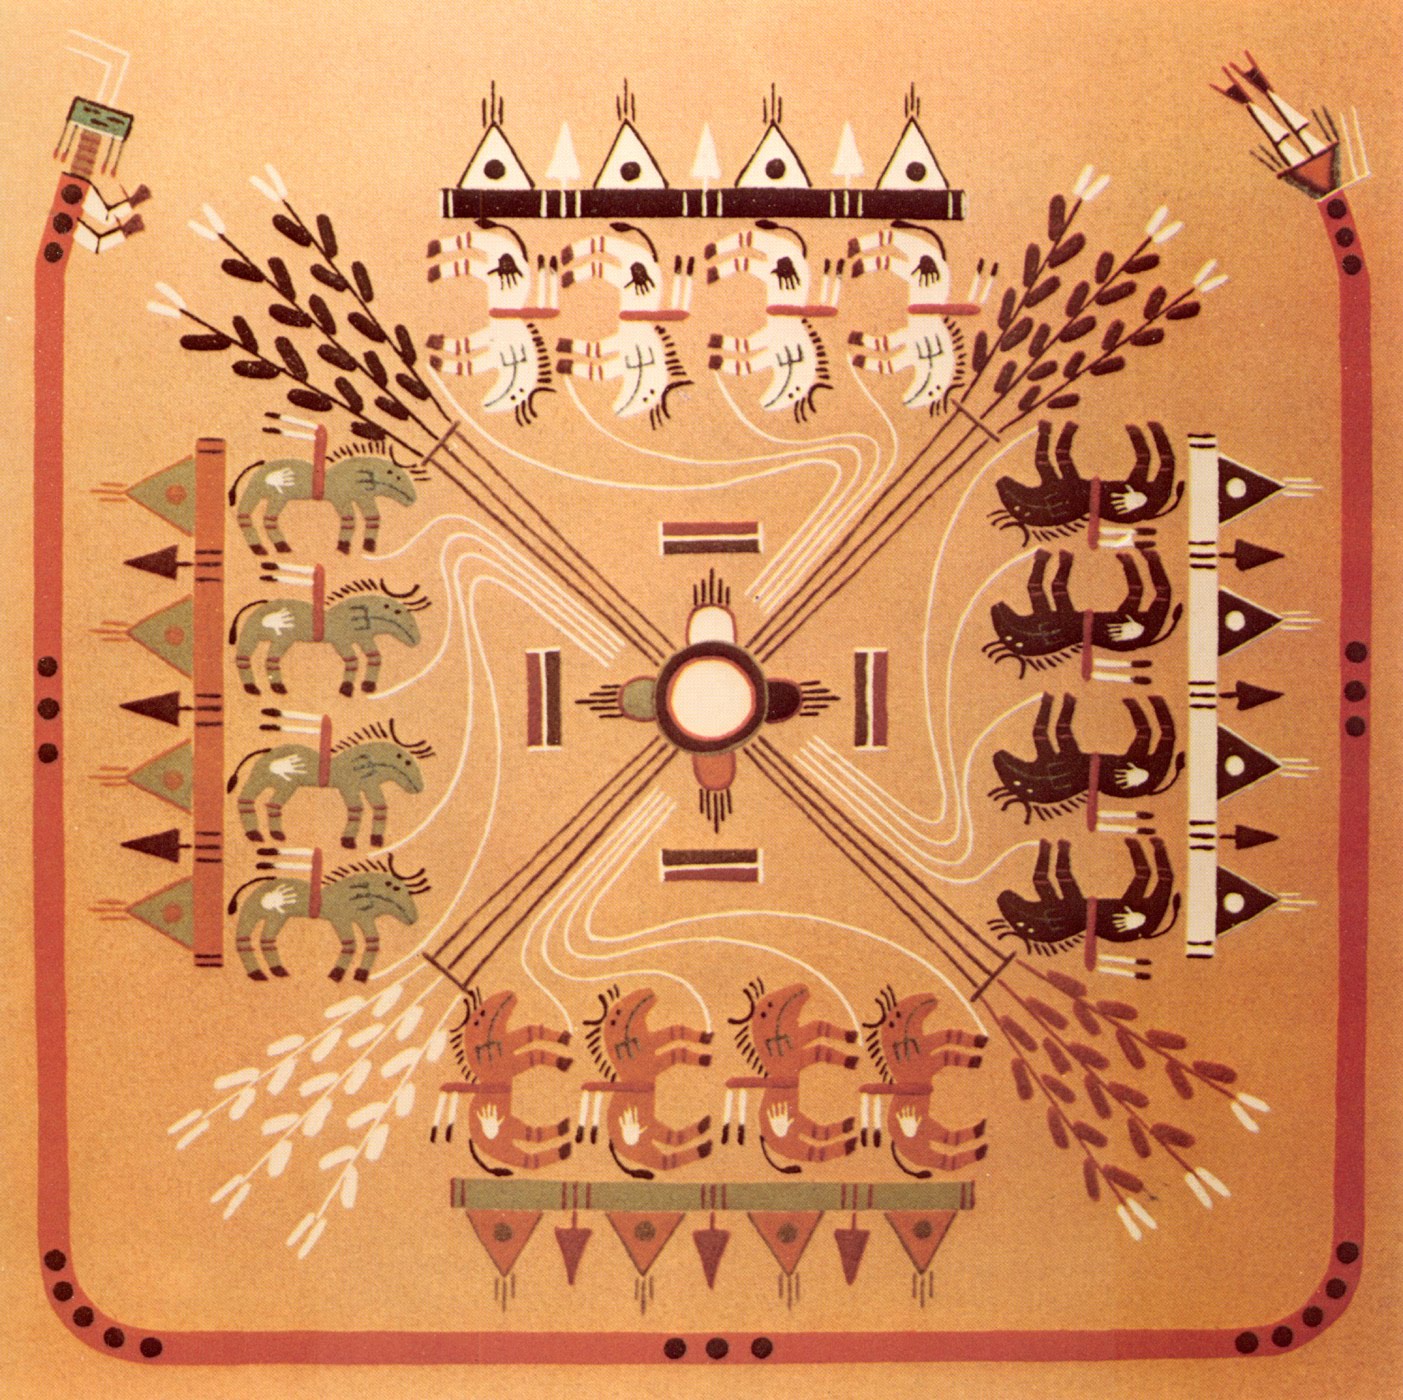 Navajo sandpainting of the Buffalo People, a sacred ritual.